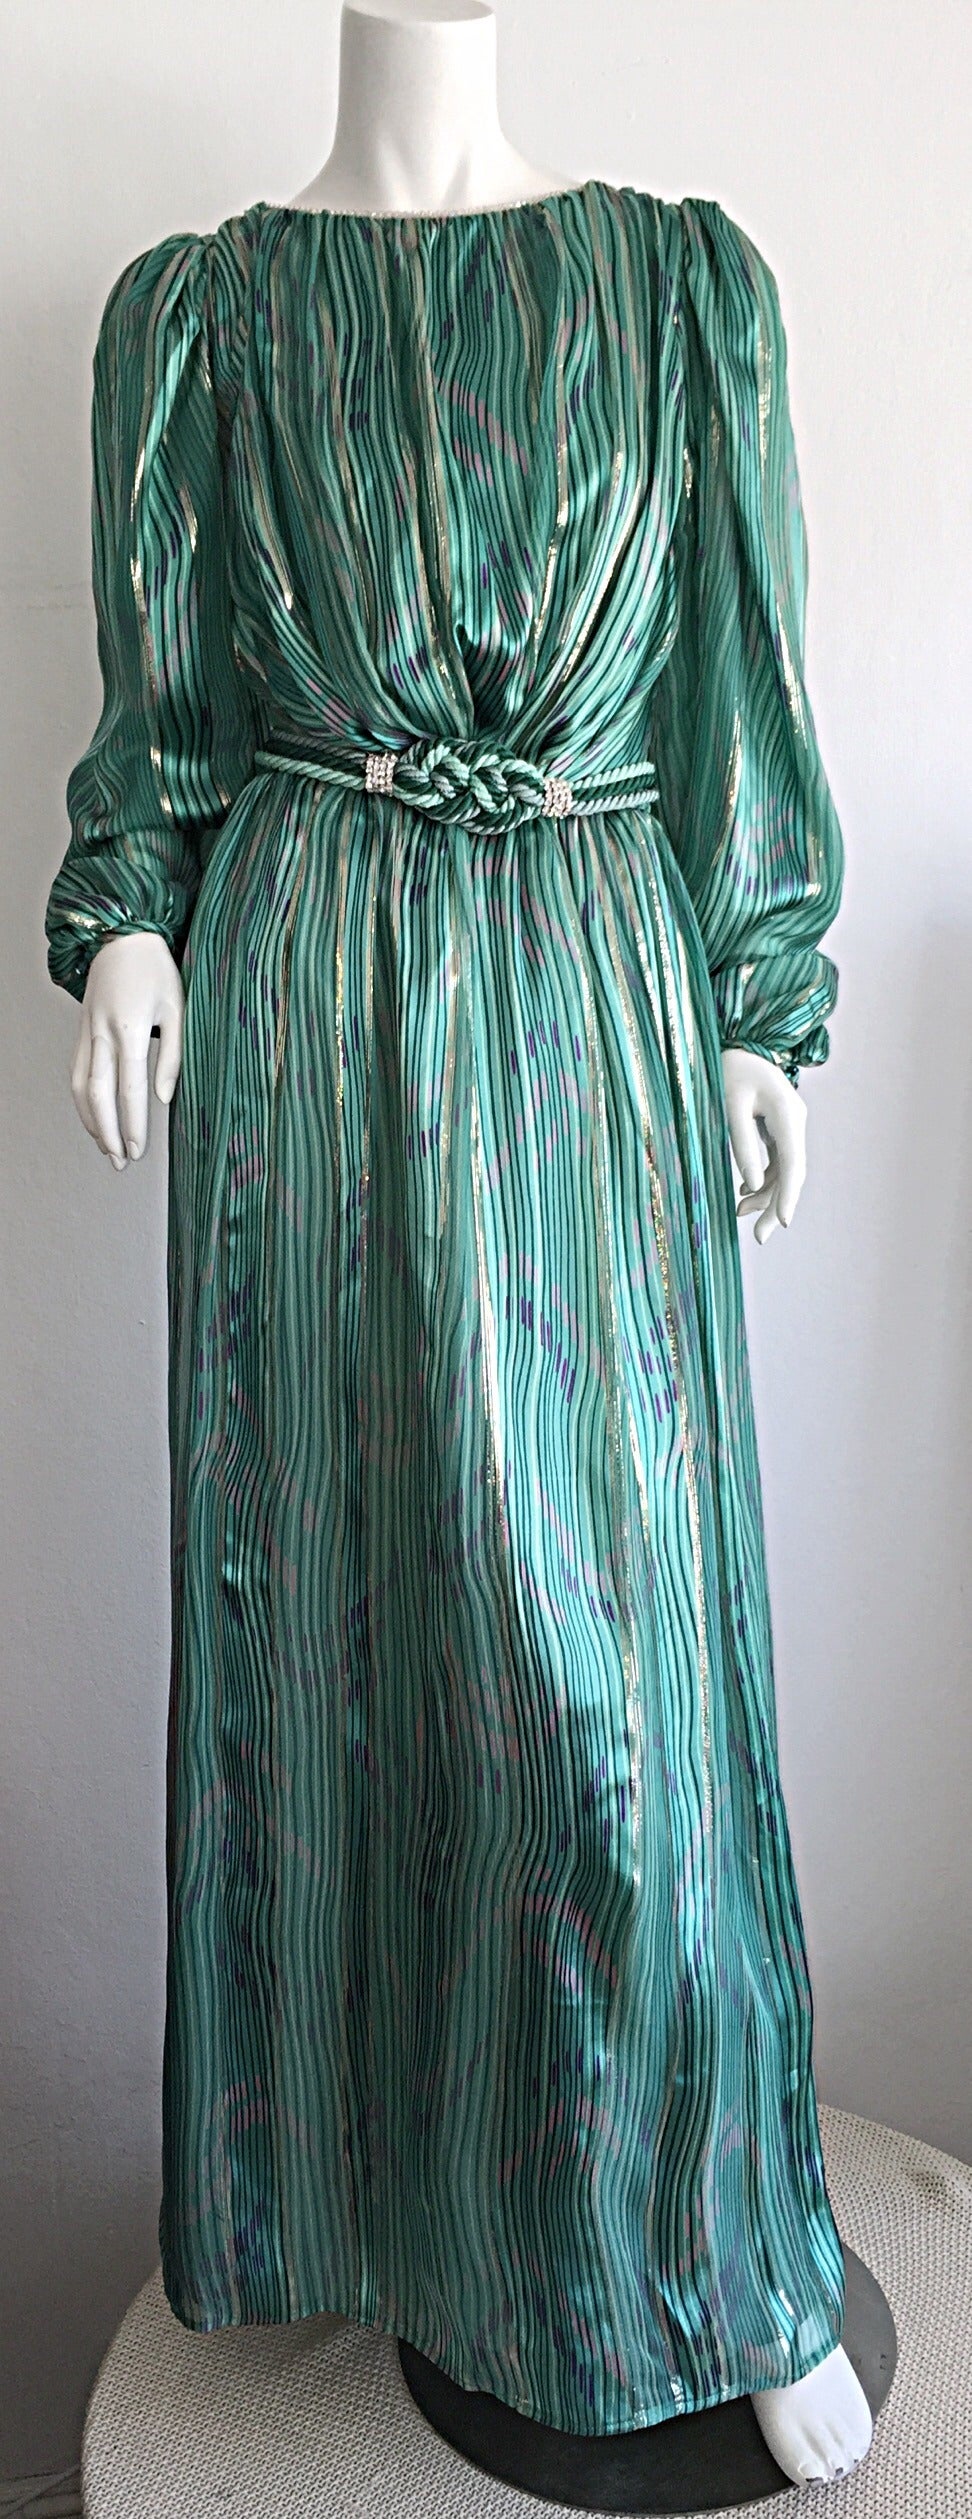 Stunning 1980s Green Metallic Patterned Silk Dress w/ Rhinestone Braid Belt 1